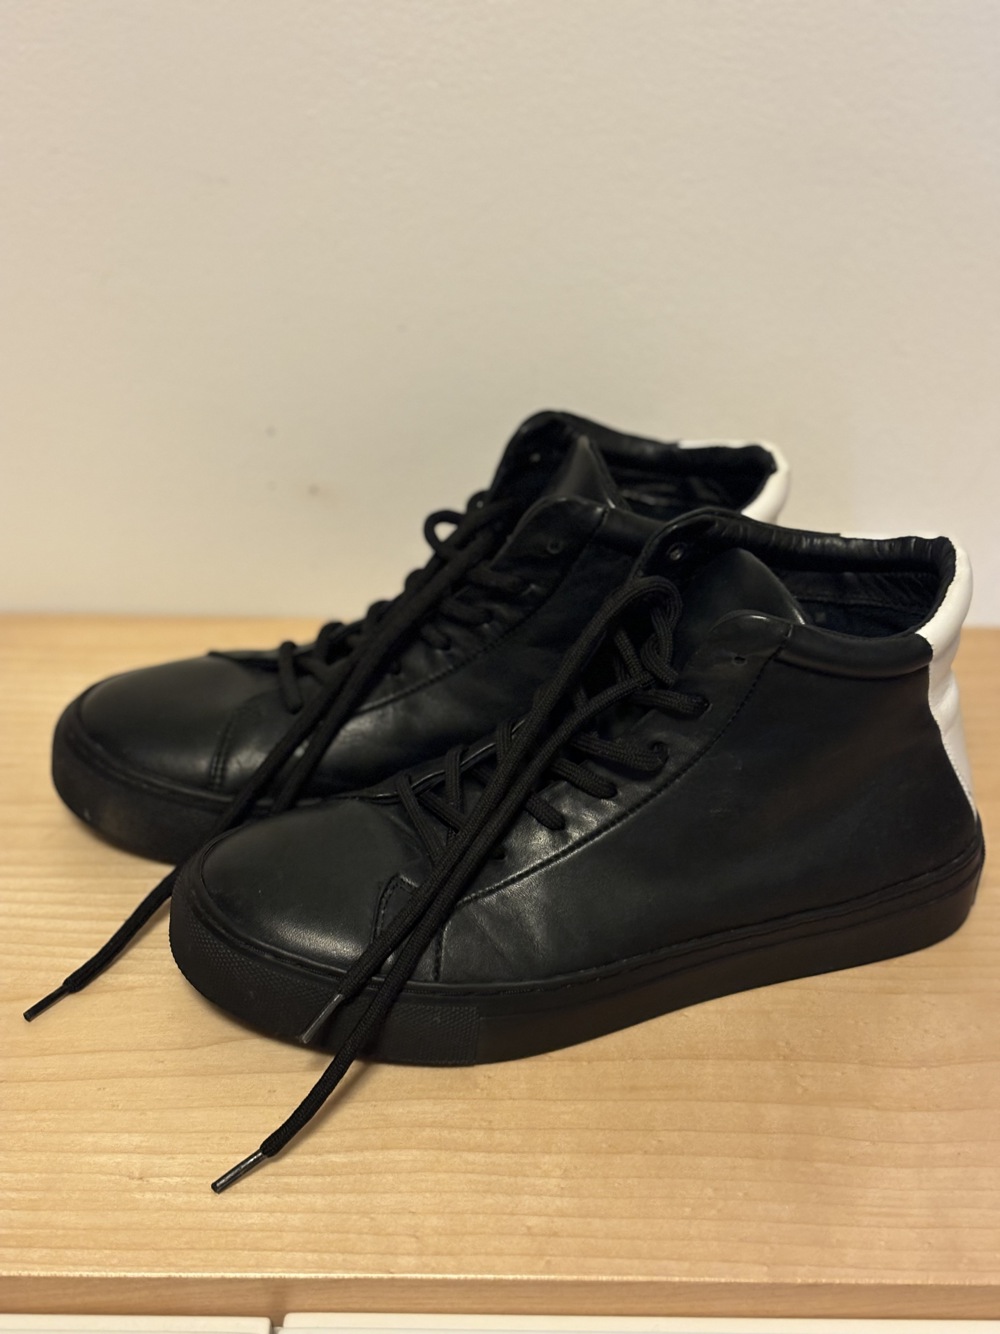 Royal Republiq Schuhe schwarz weiß Leder 